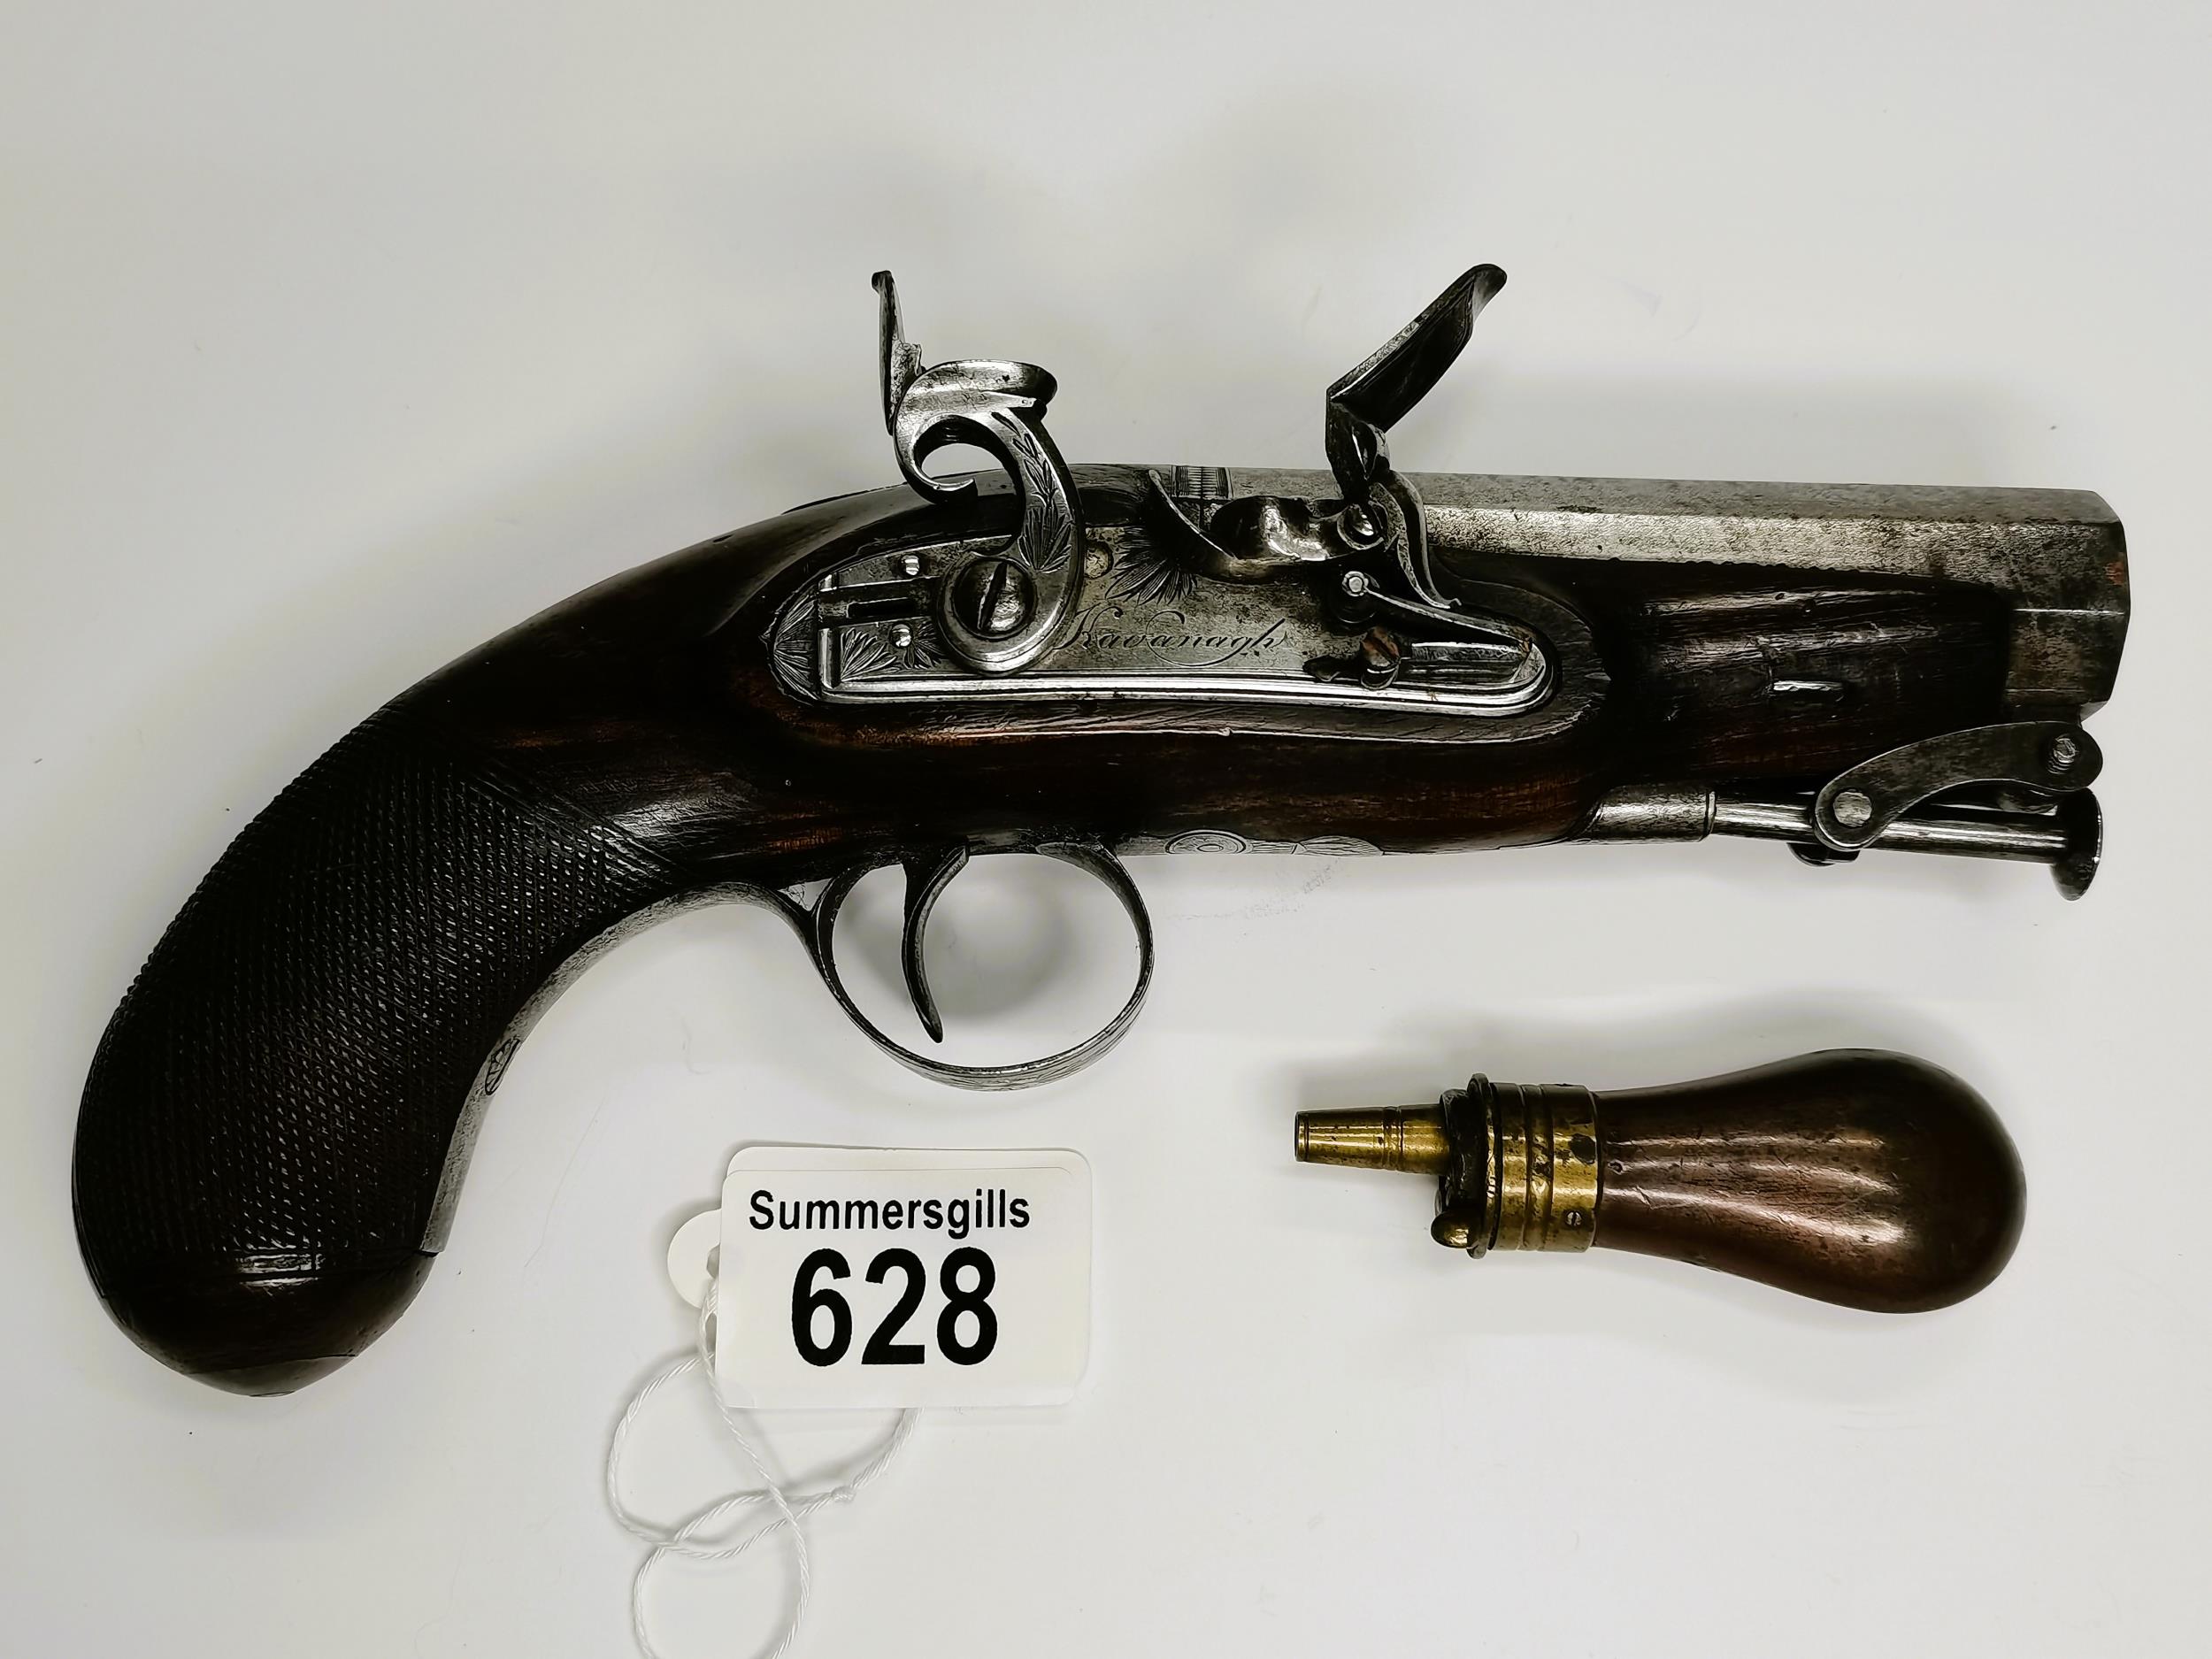 Kavanagh pistol with powder flask